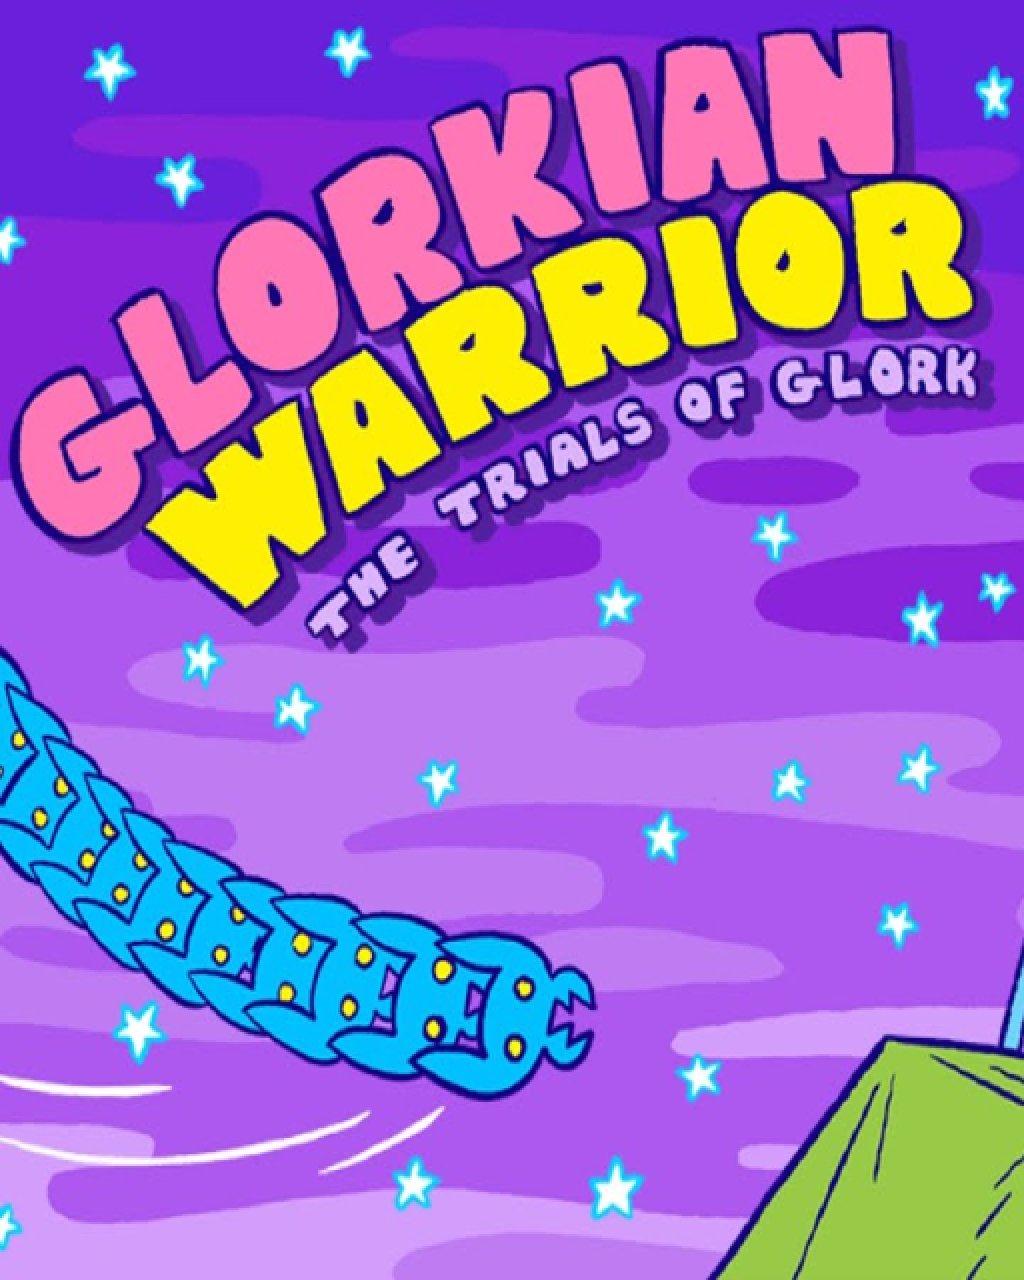 Glorkian Warrior The Trials Of Glork